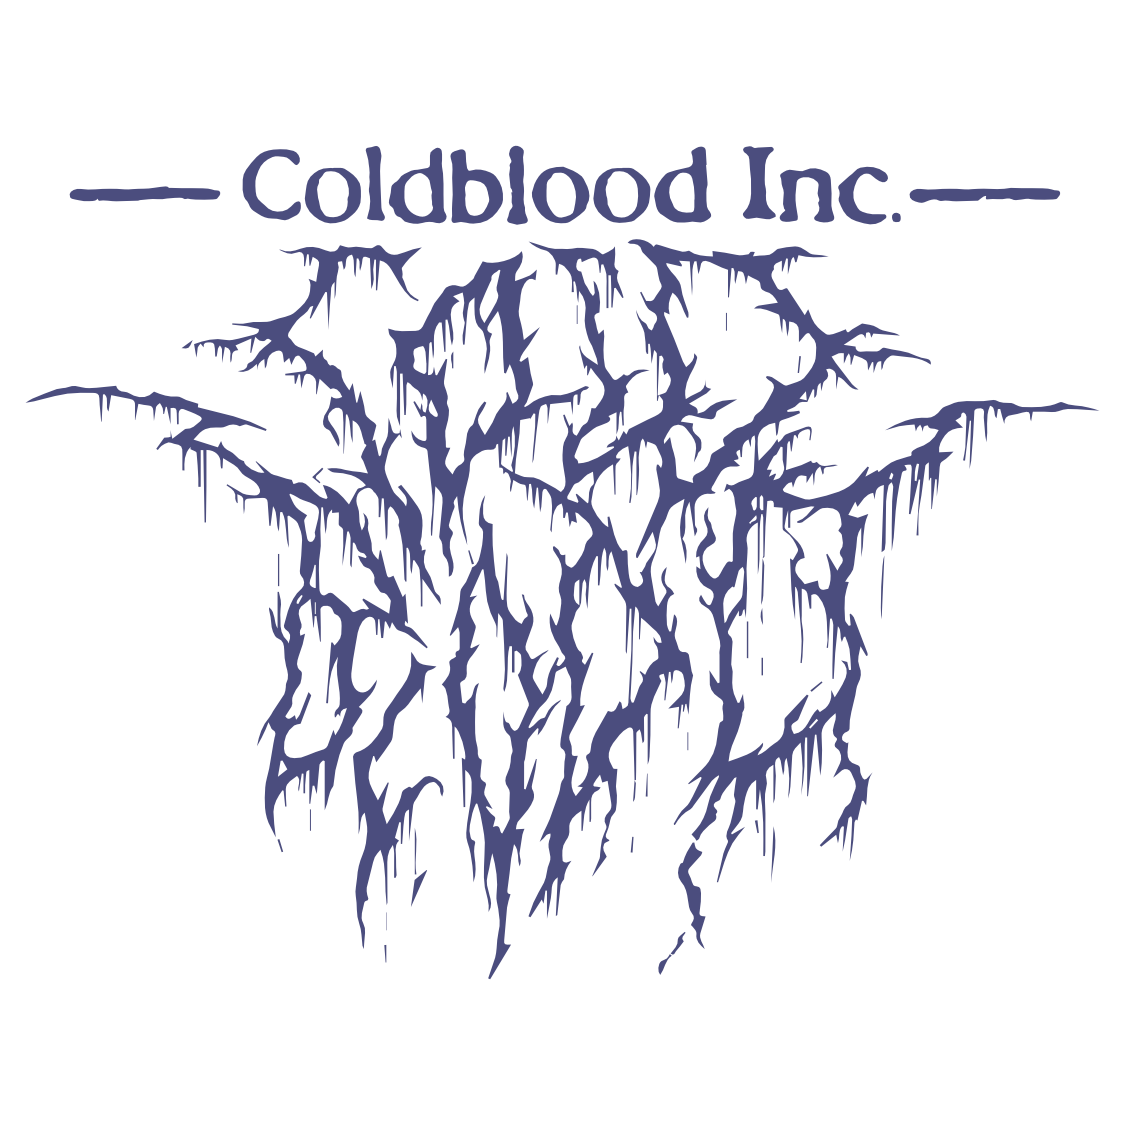 Coldblood Inc.